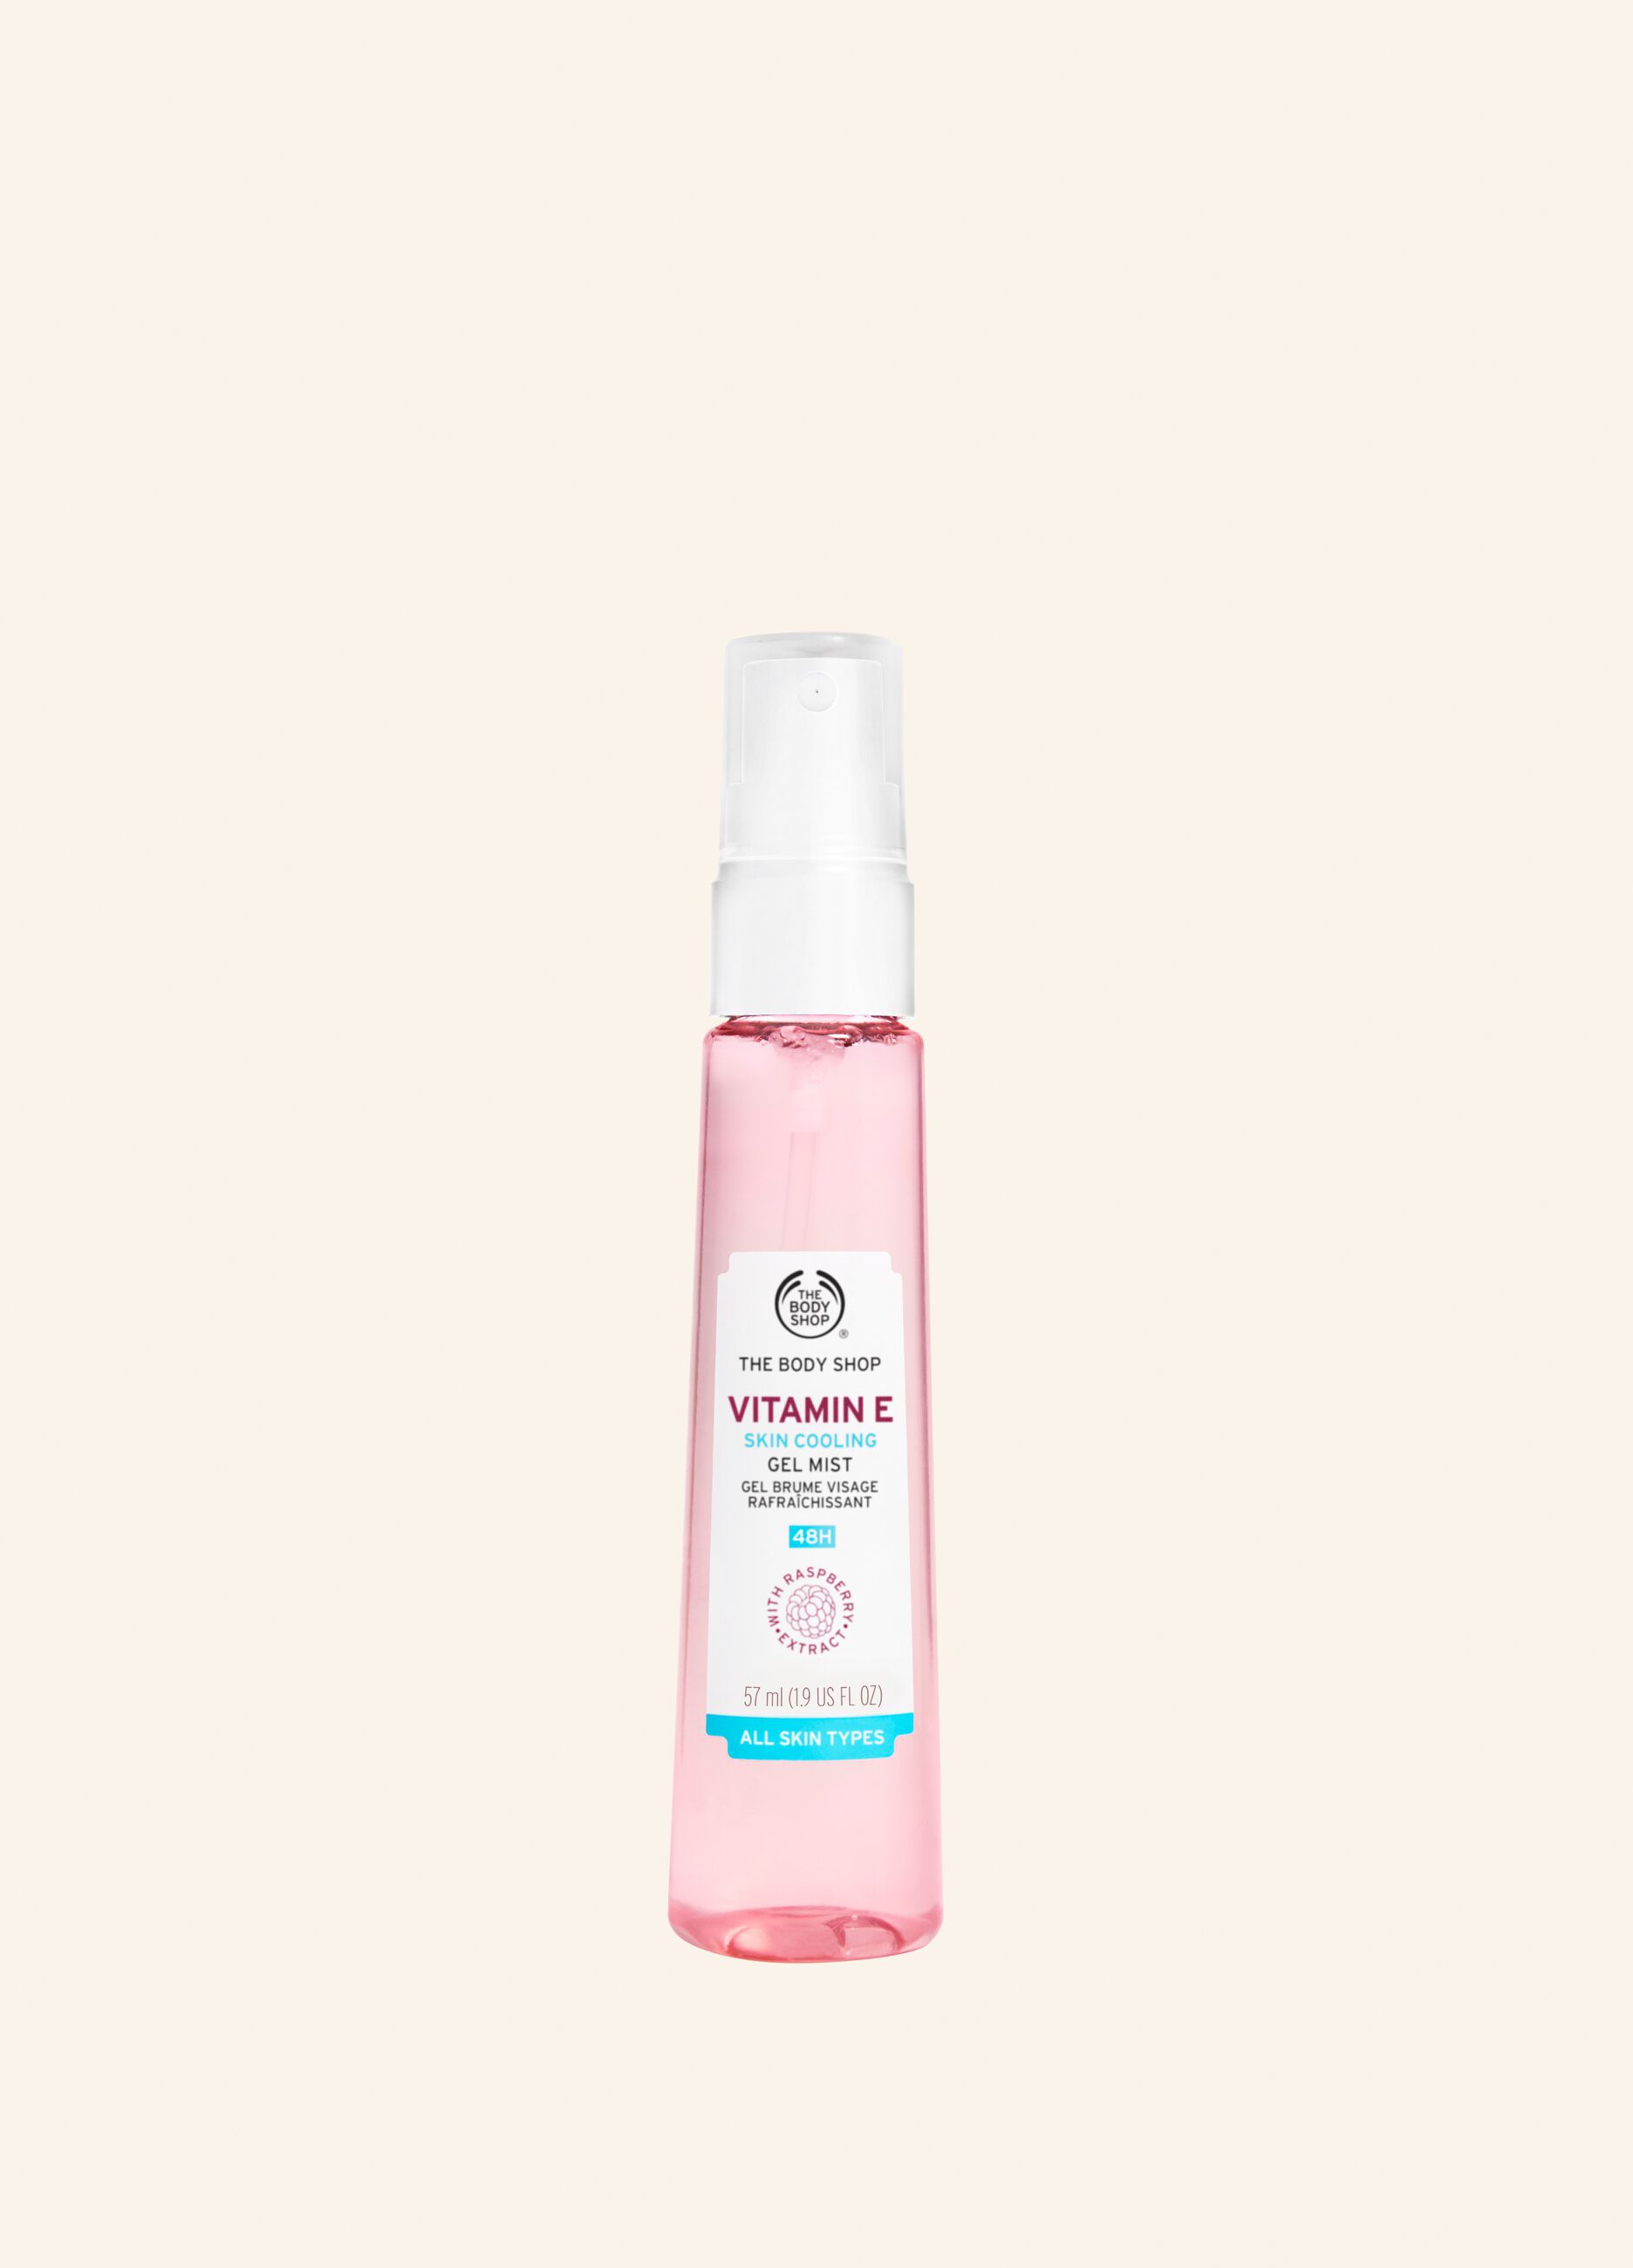 The Body Shop refreshing gel spray with vitamin E